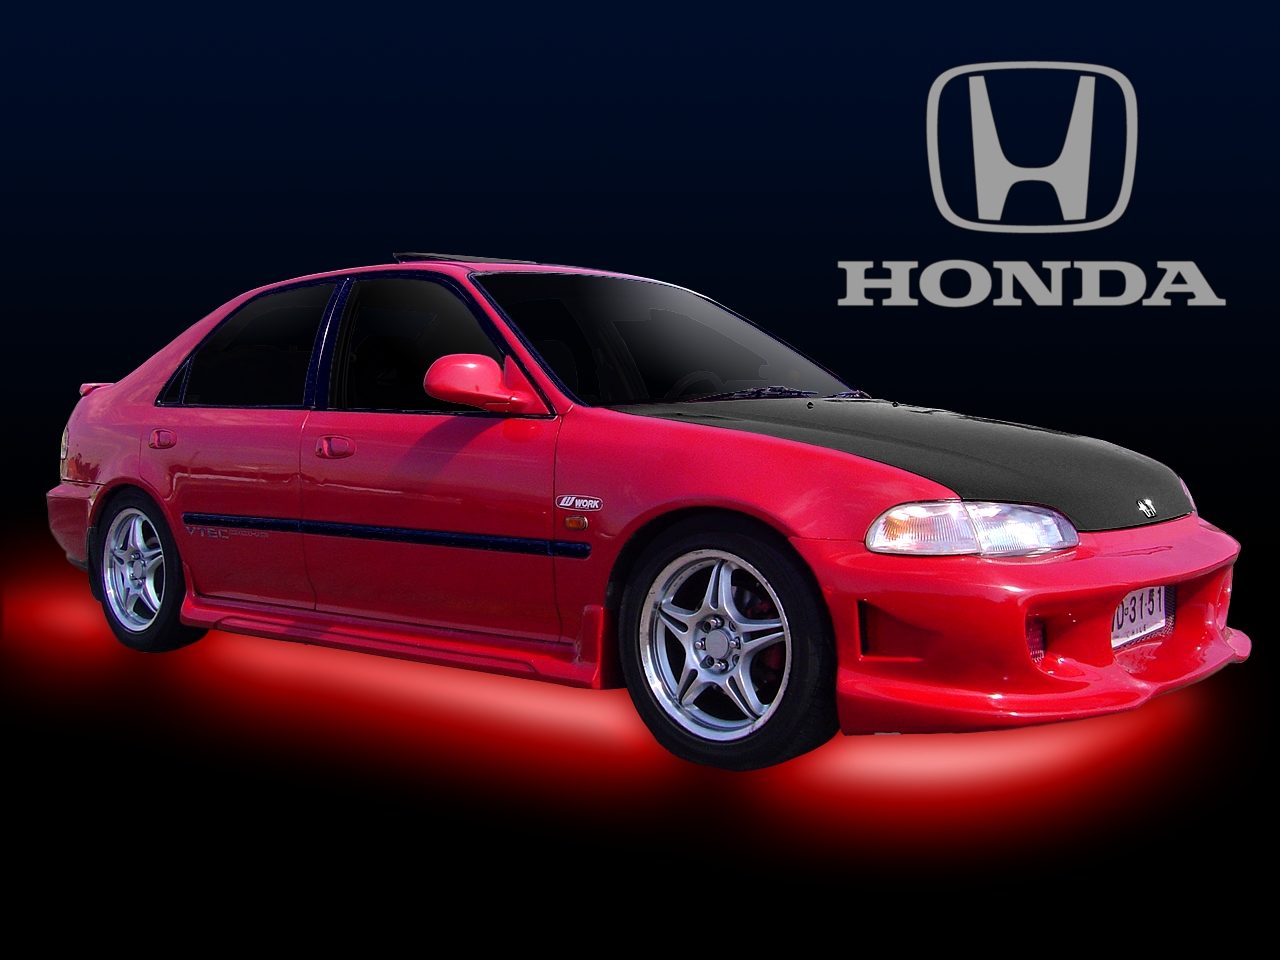  Honda ferio EG 9